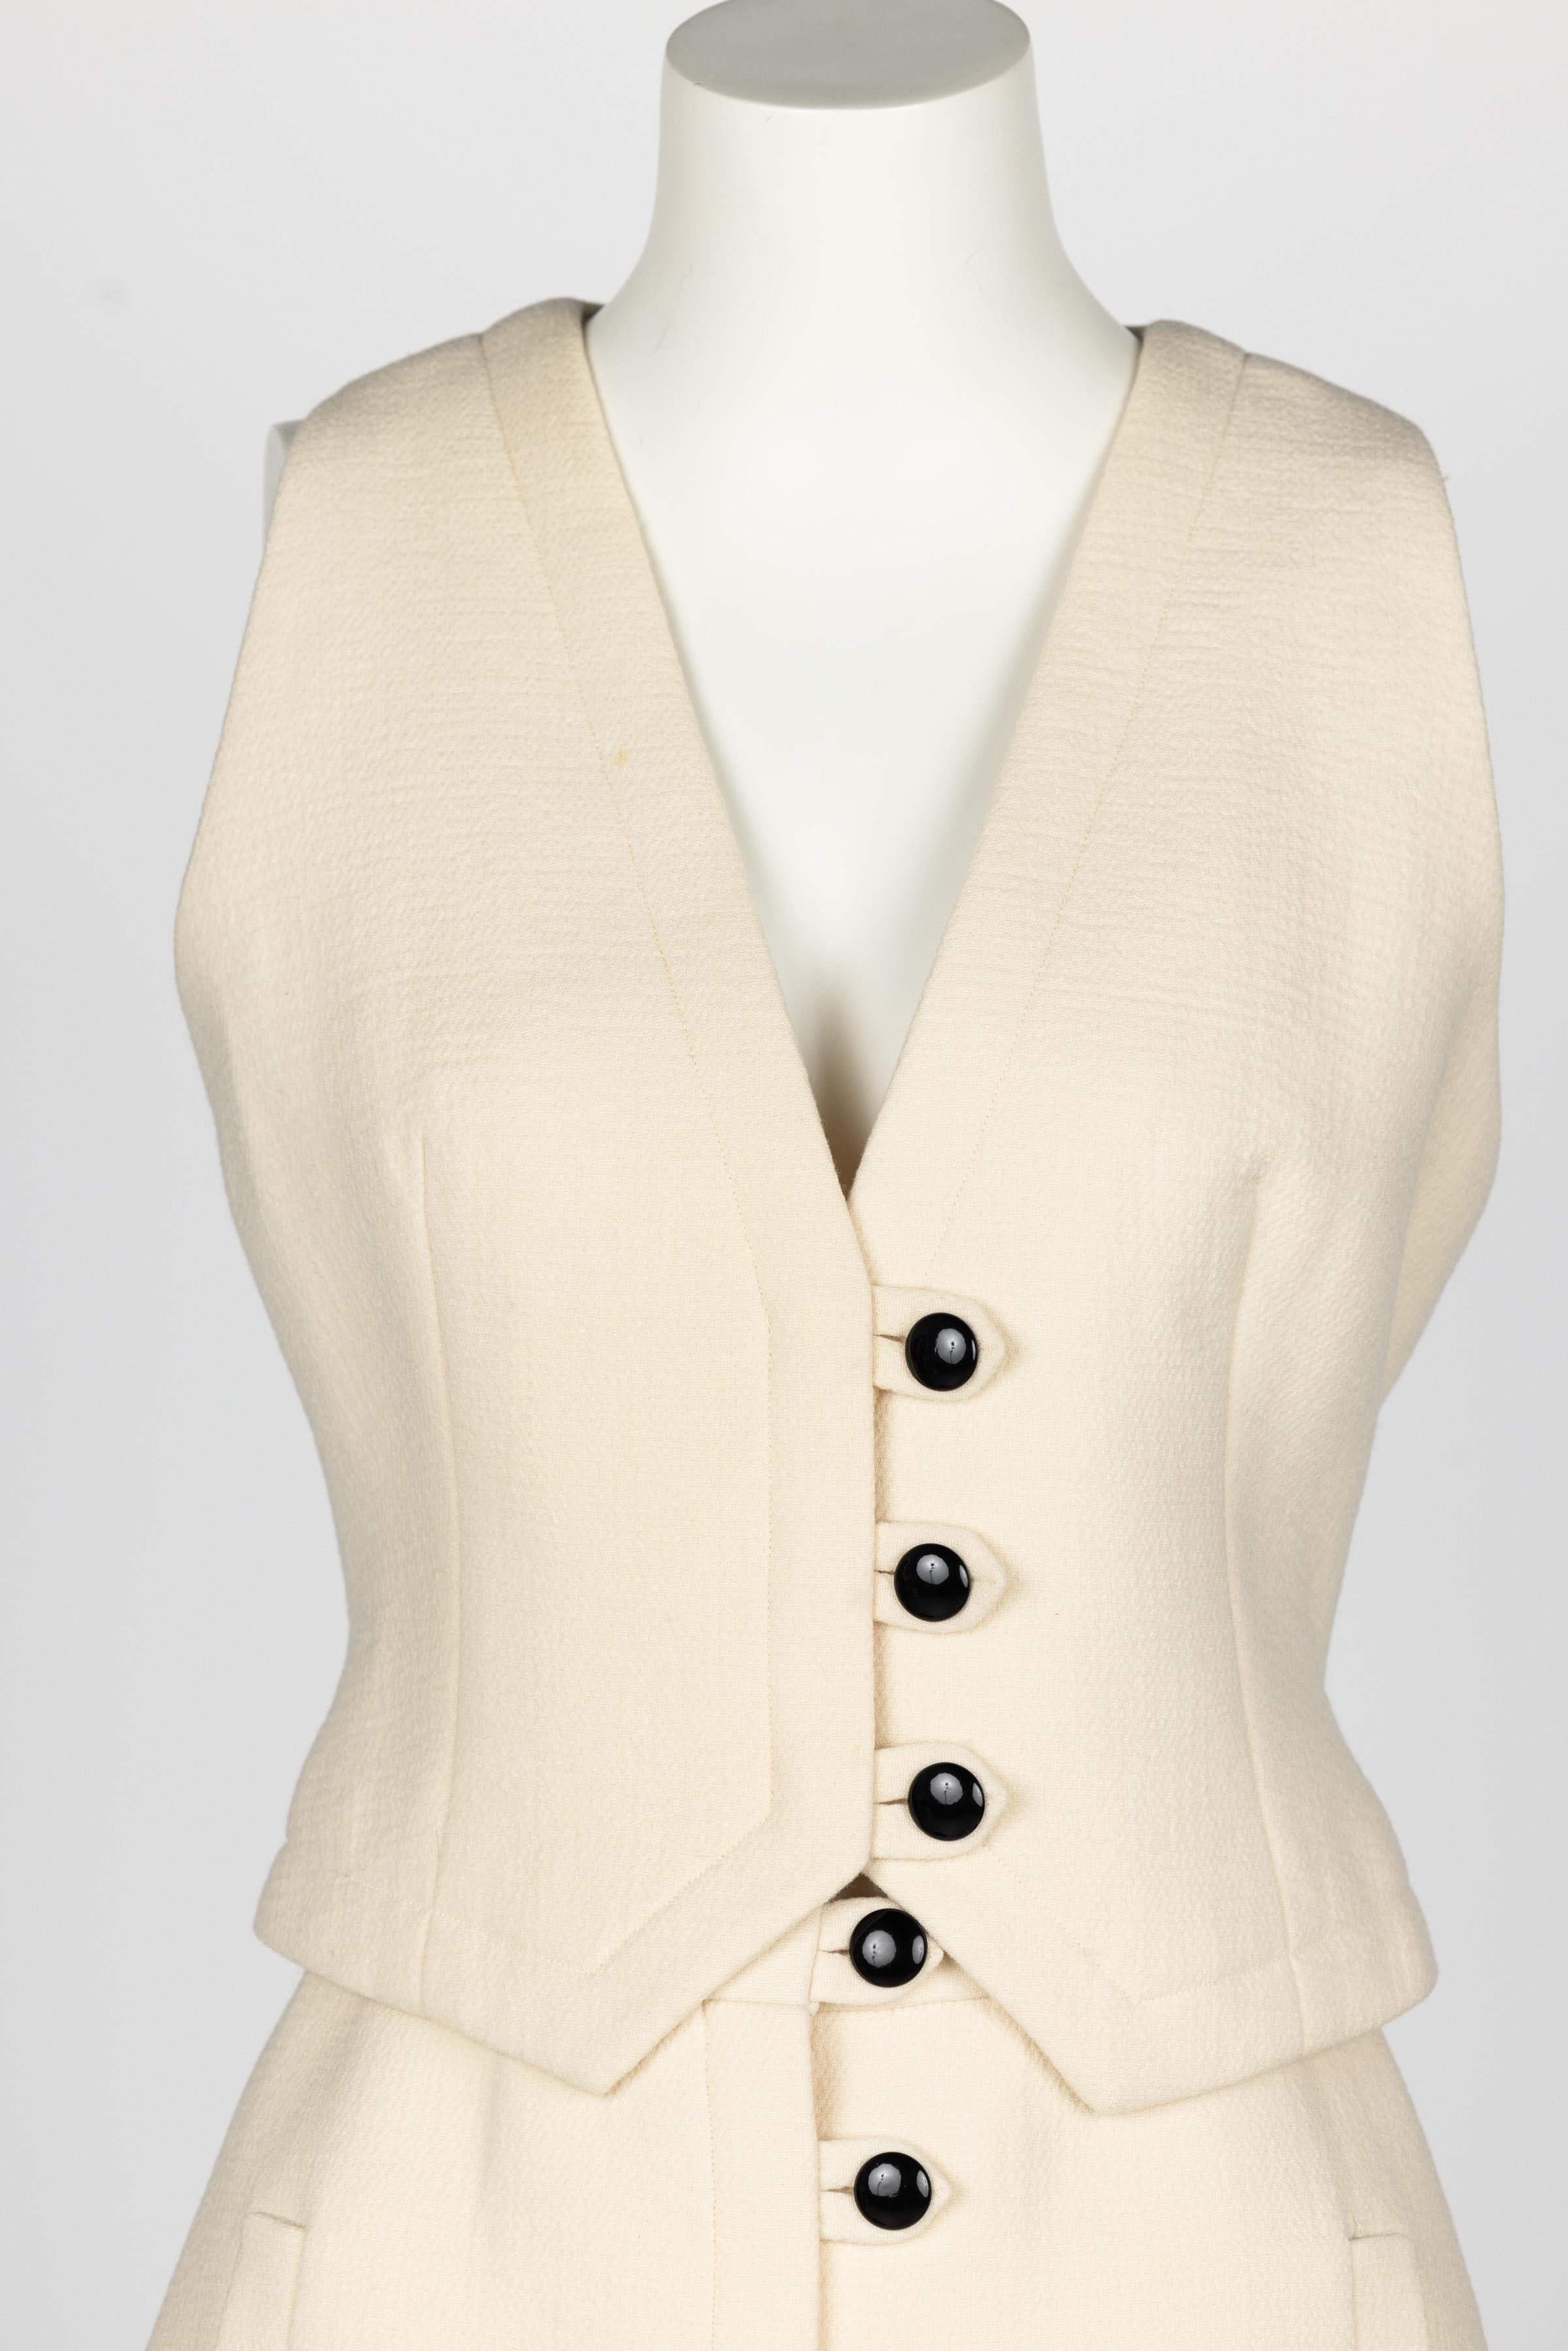 1960s Pauline Trigere Ivory & Black Tailored Vest Skirt Suit For Sale 4